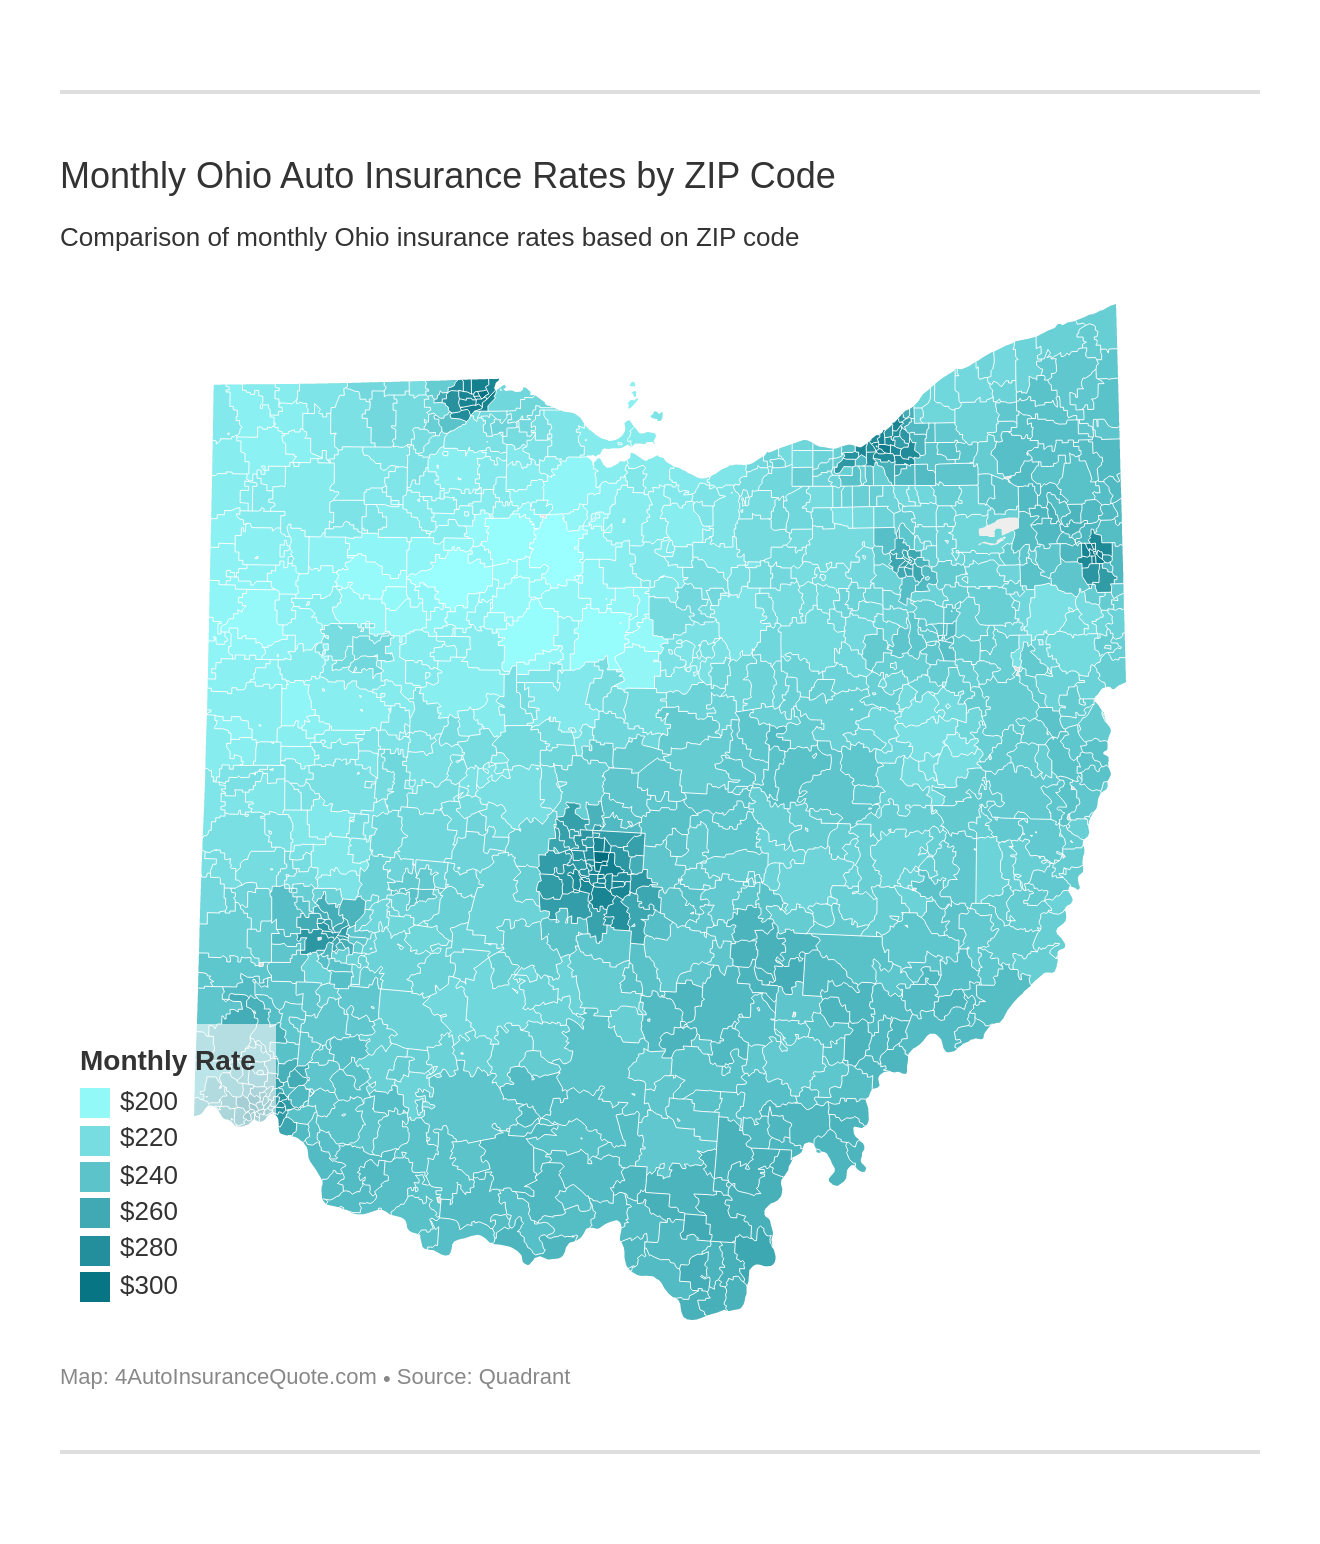 Monthly Ohio Auto Insurance Rates by ZIP Code